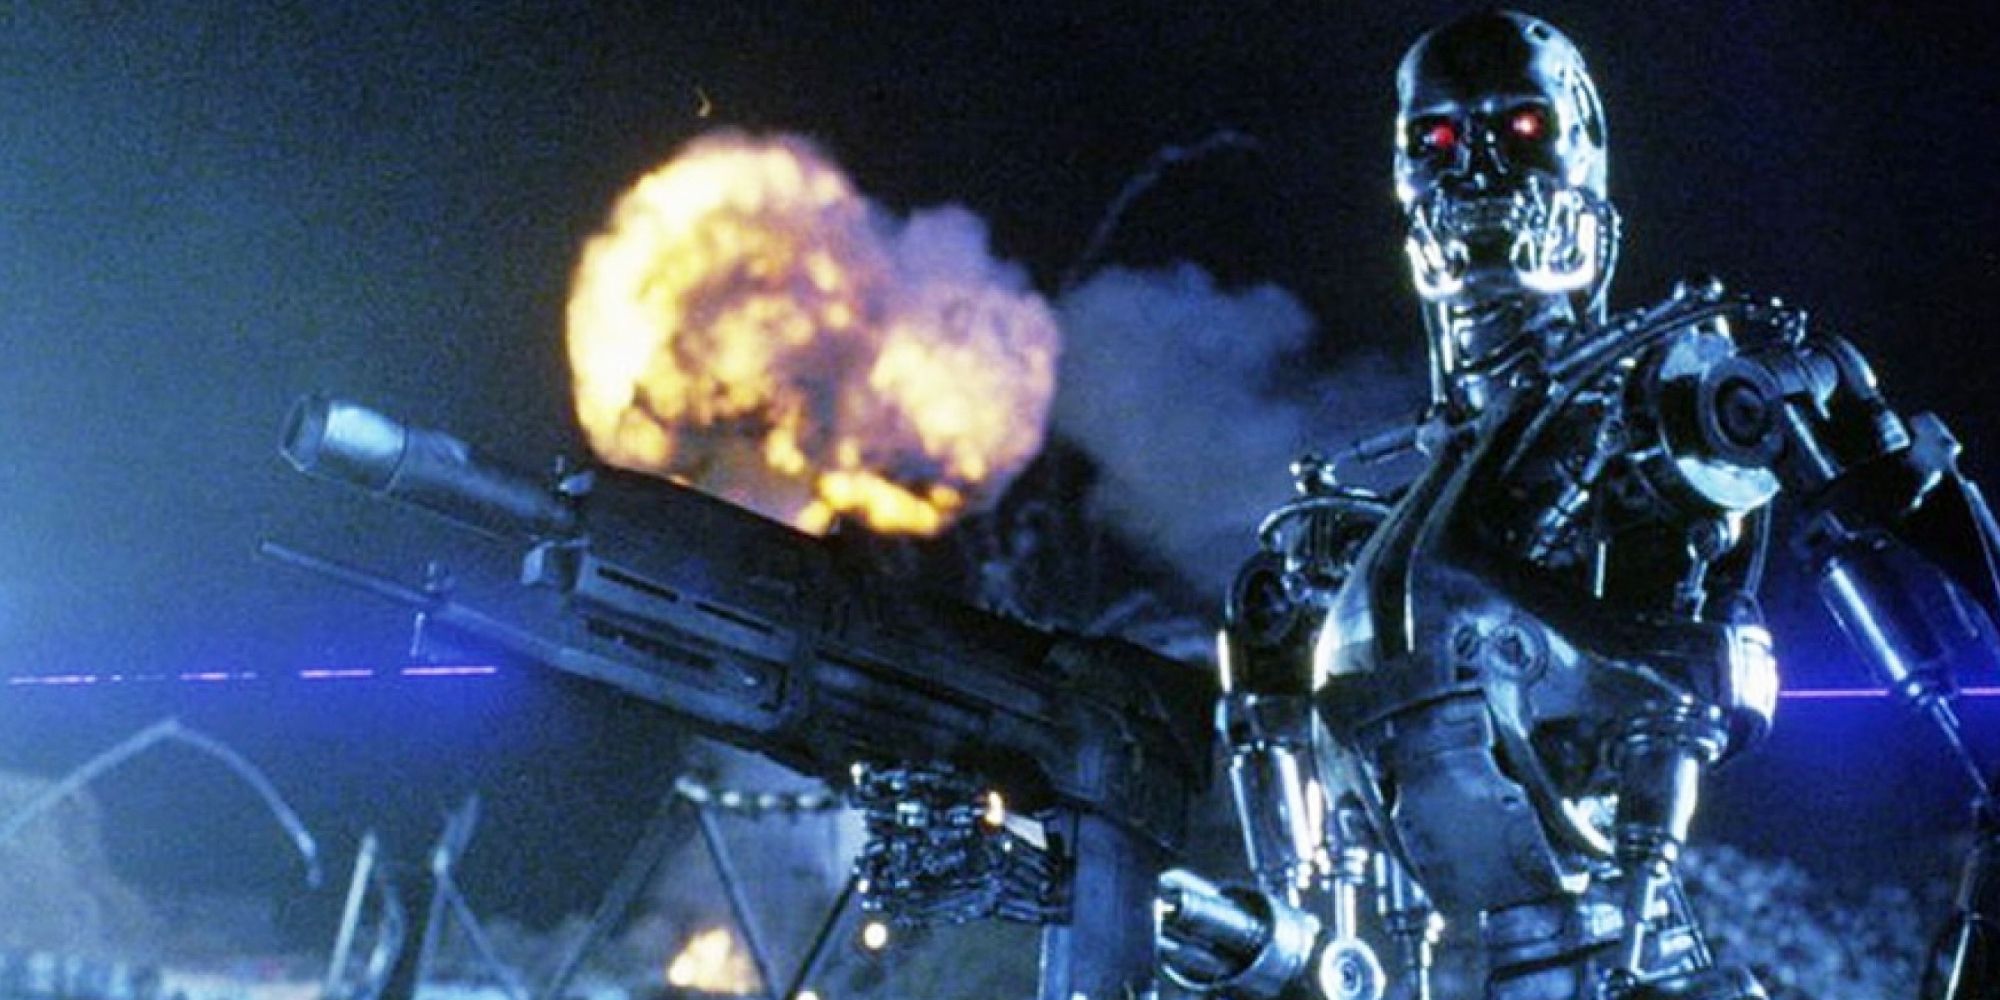 Future of Terminator 2 (2029) Scene - Judgment Day - 1991